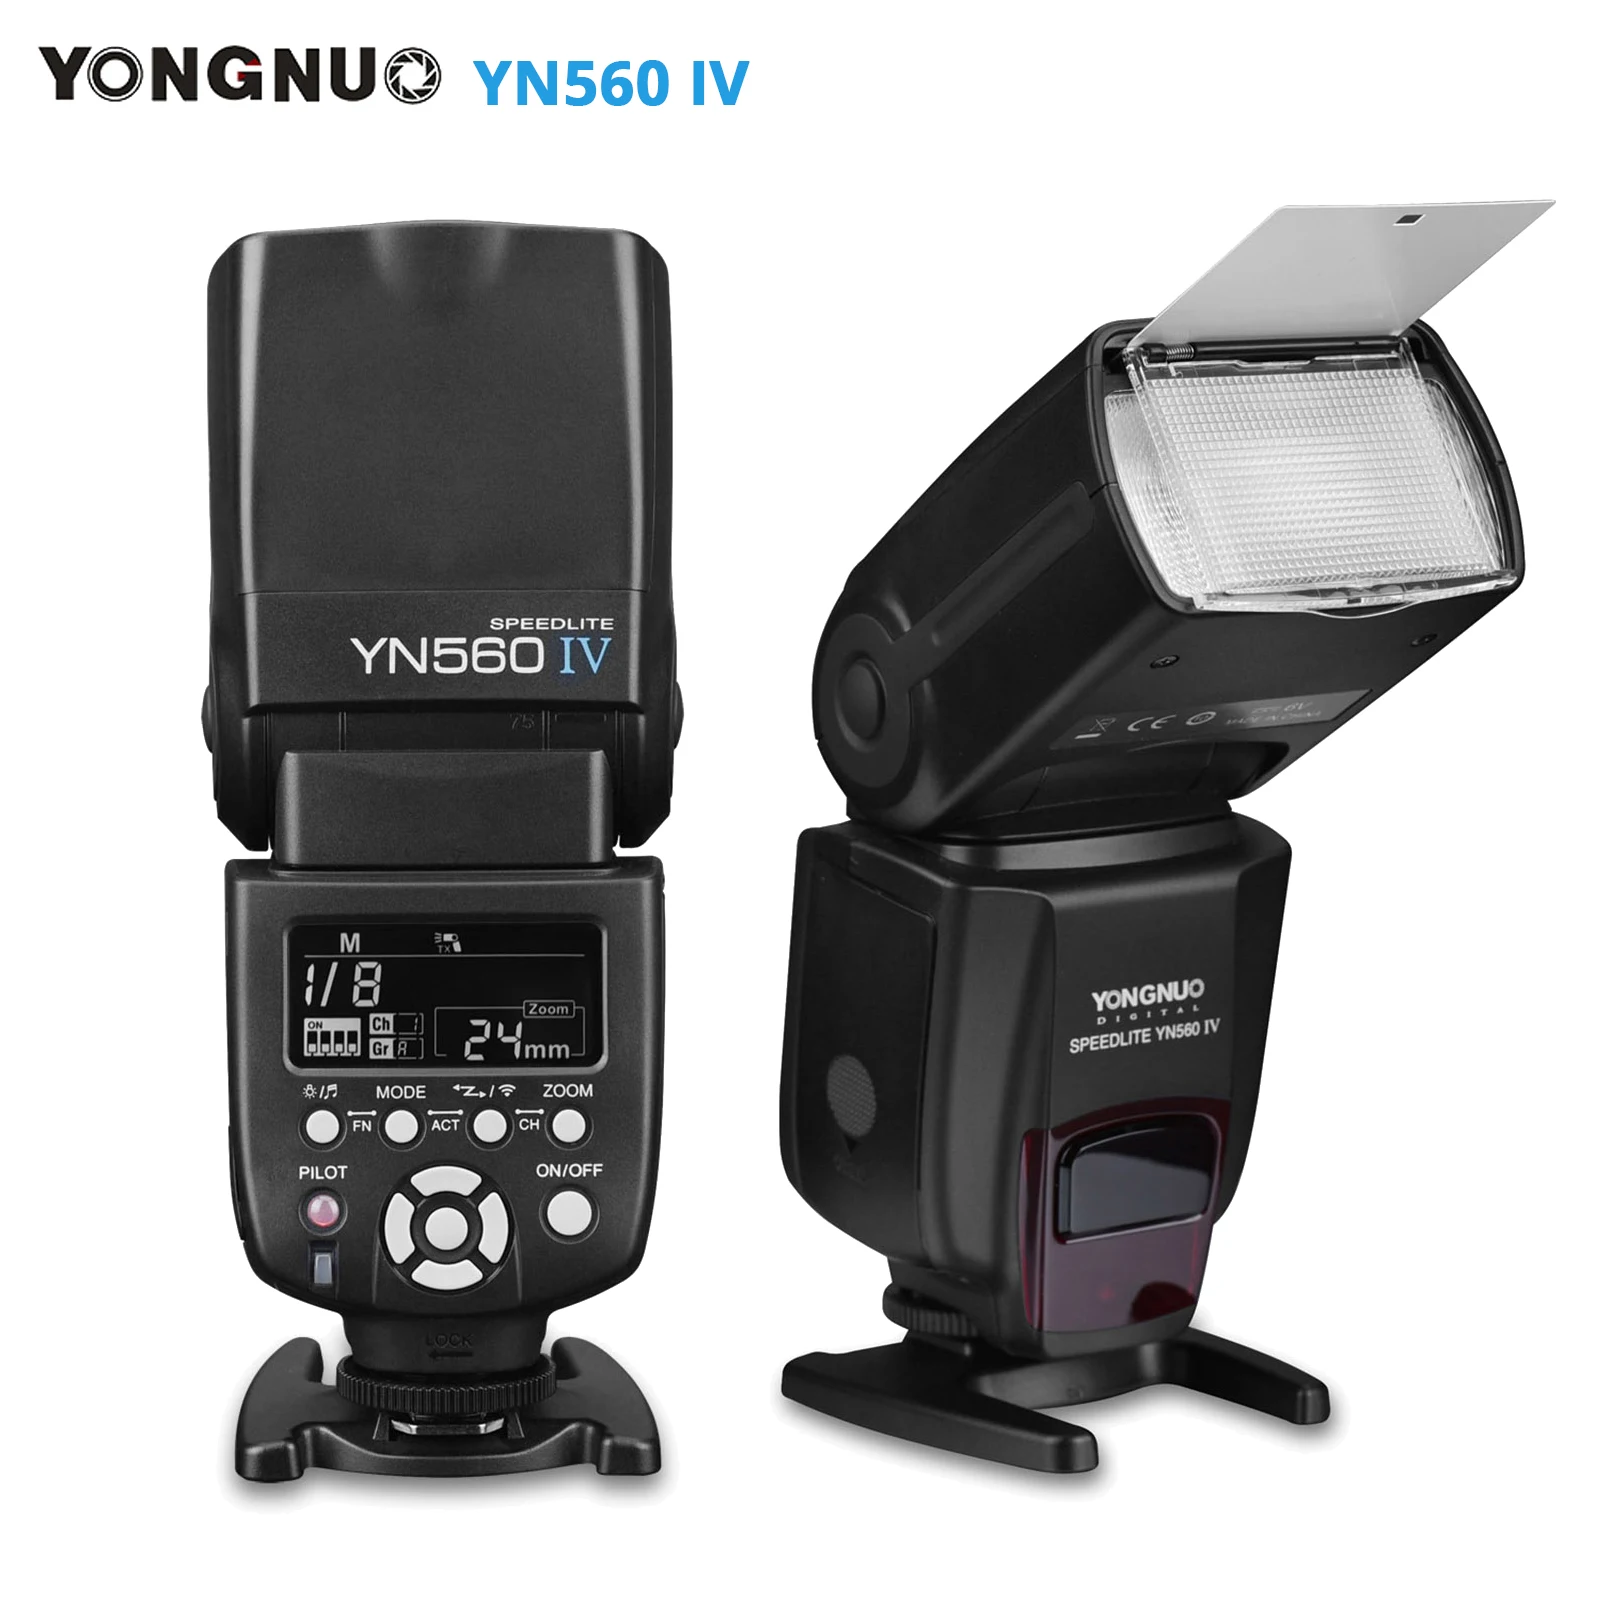 YONGNUO YN560 IV Universal 2.4G Wireless Speedlite Flash On-camera Master Slave Speedlight GN58 for Canon Nikon Sony DSLR Camera